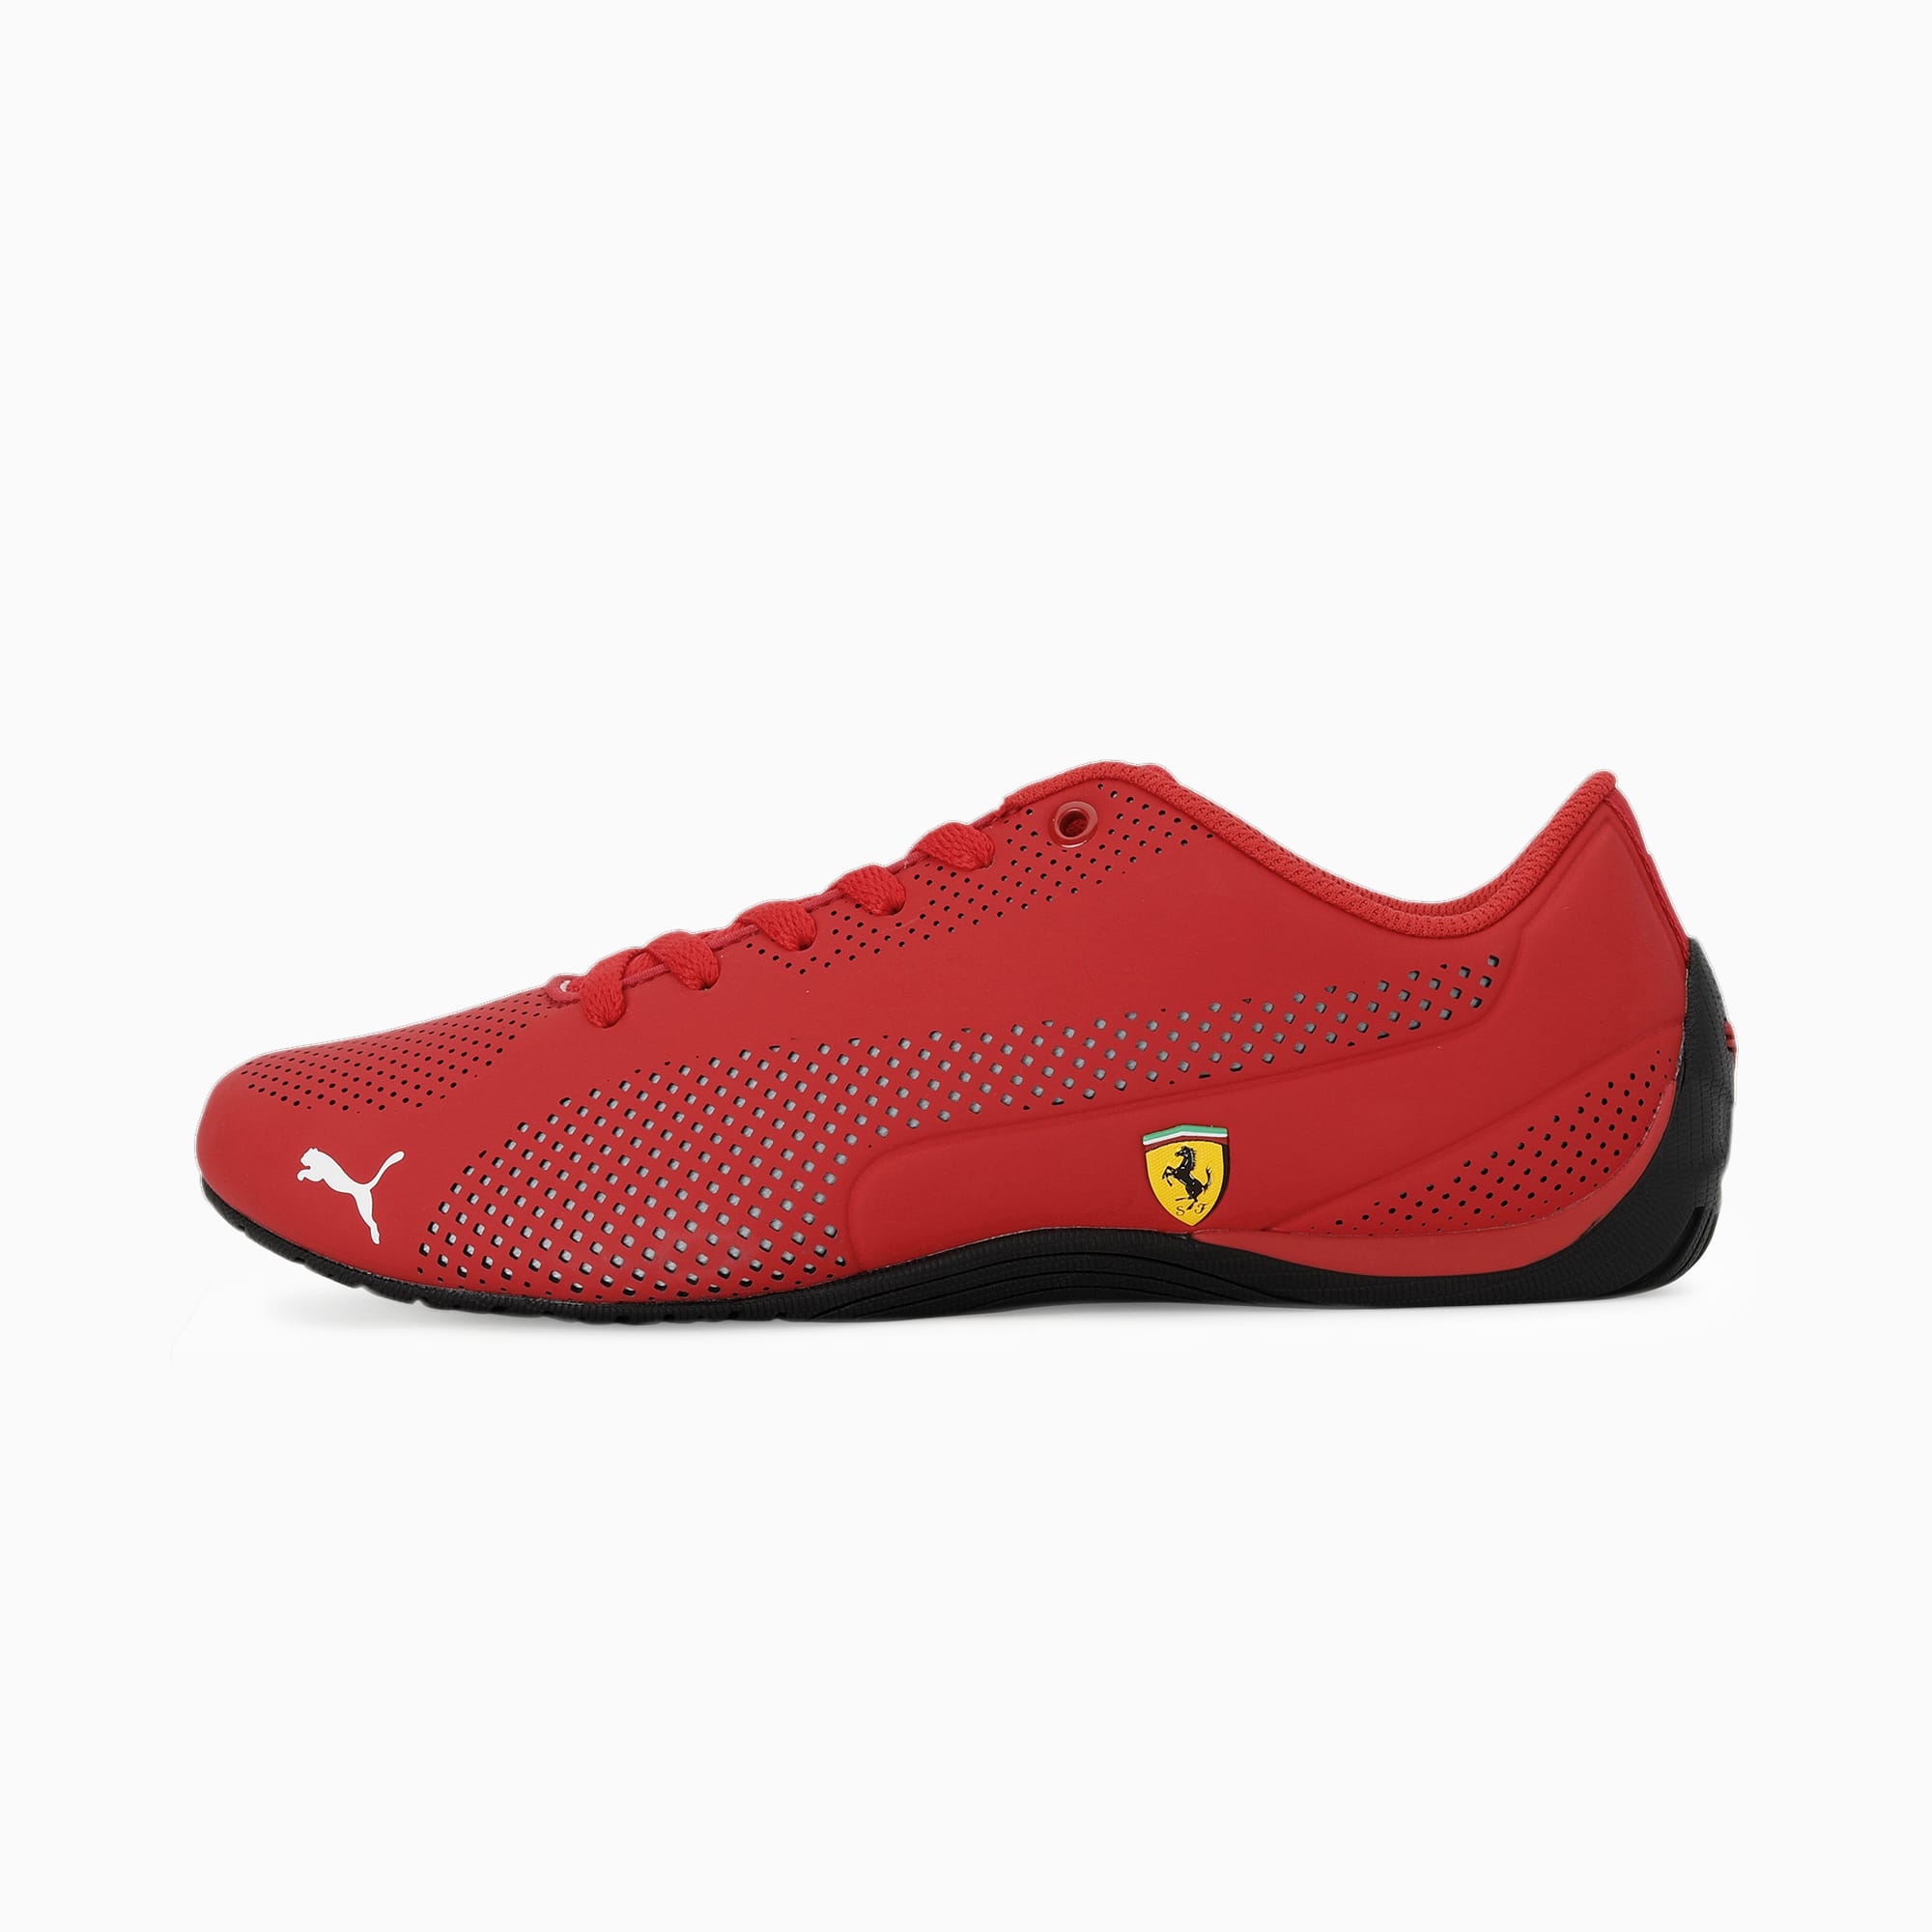 Ferrari Drift Cat 5 Ultra Shoes | Rosso Corsa-Puma White-Black | PUMA  Motorsport | PUMA